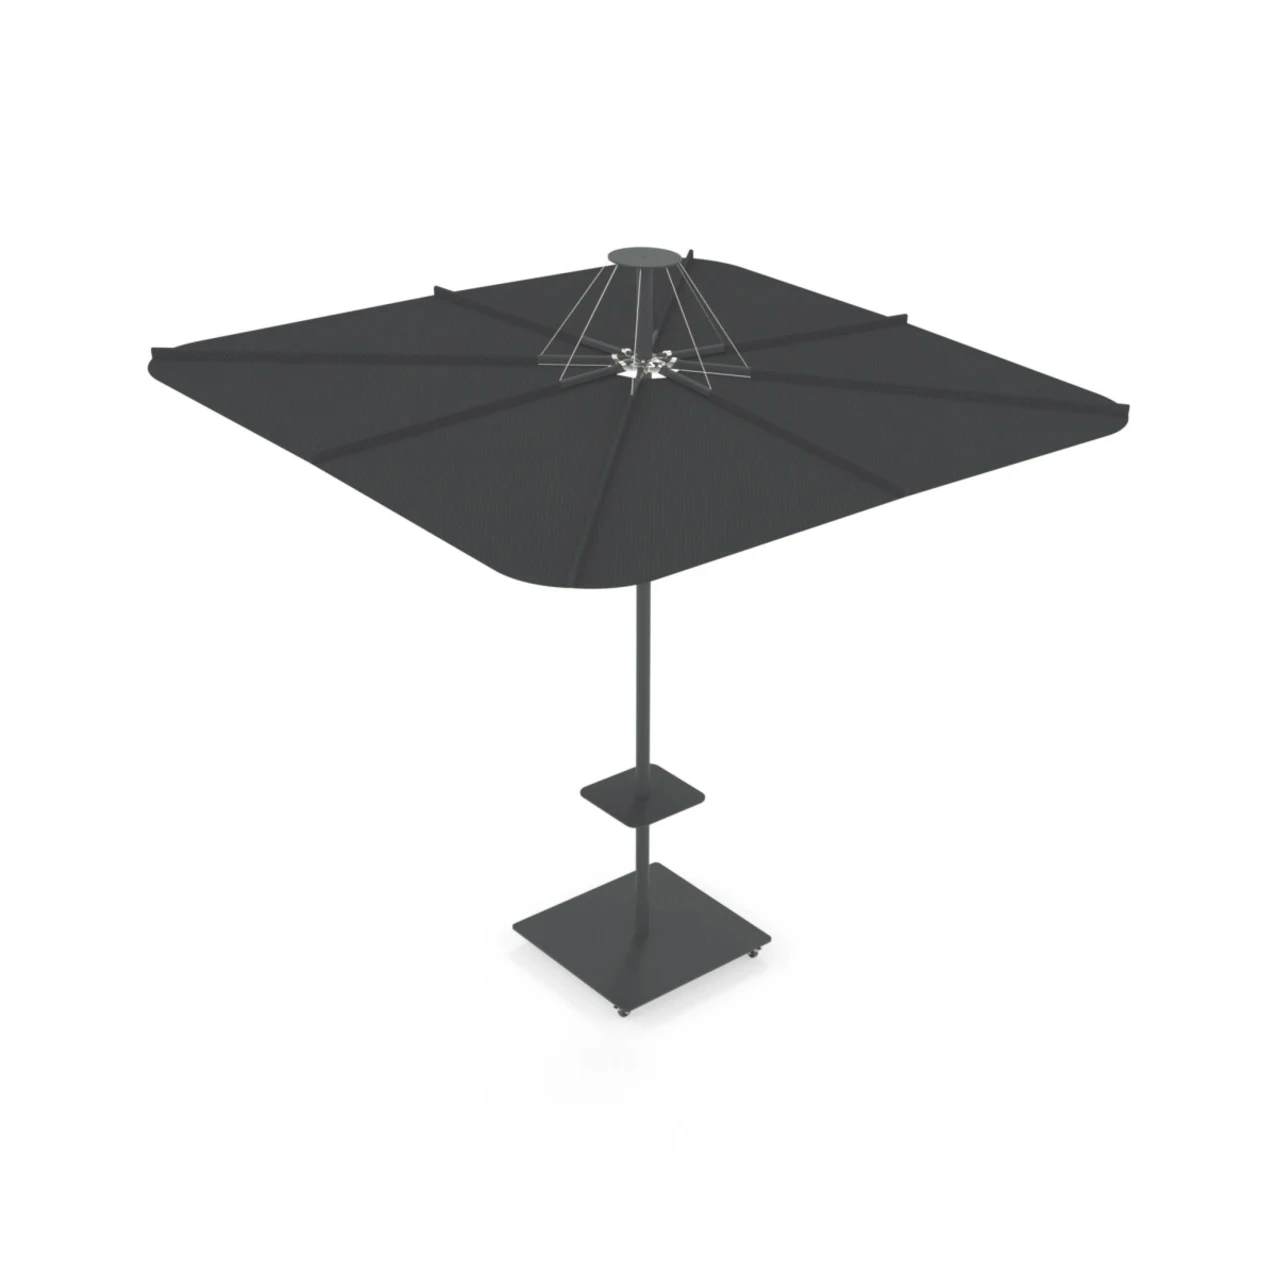 Umbrosa Infina UX Center Pole Umbrella | Full Black